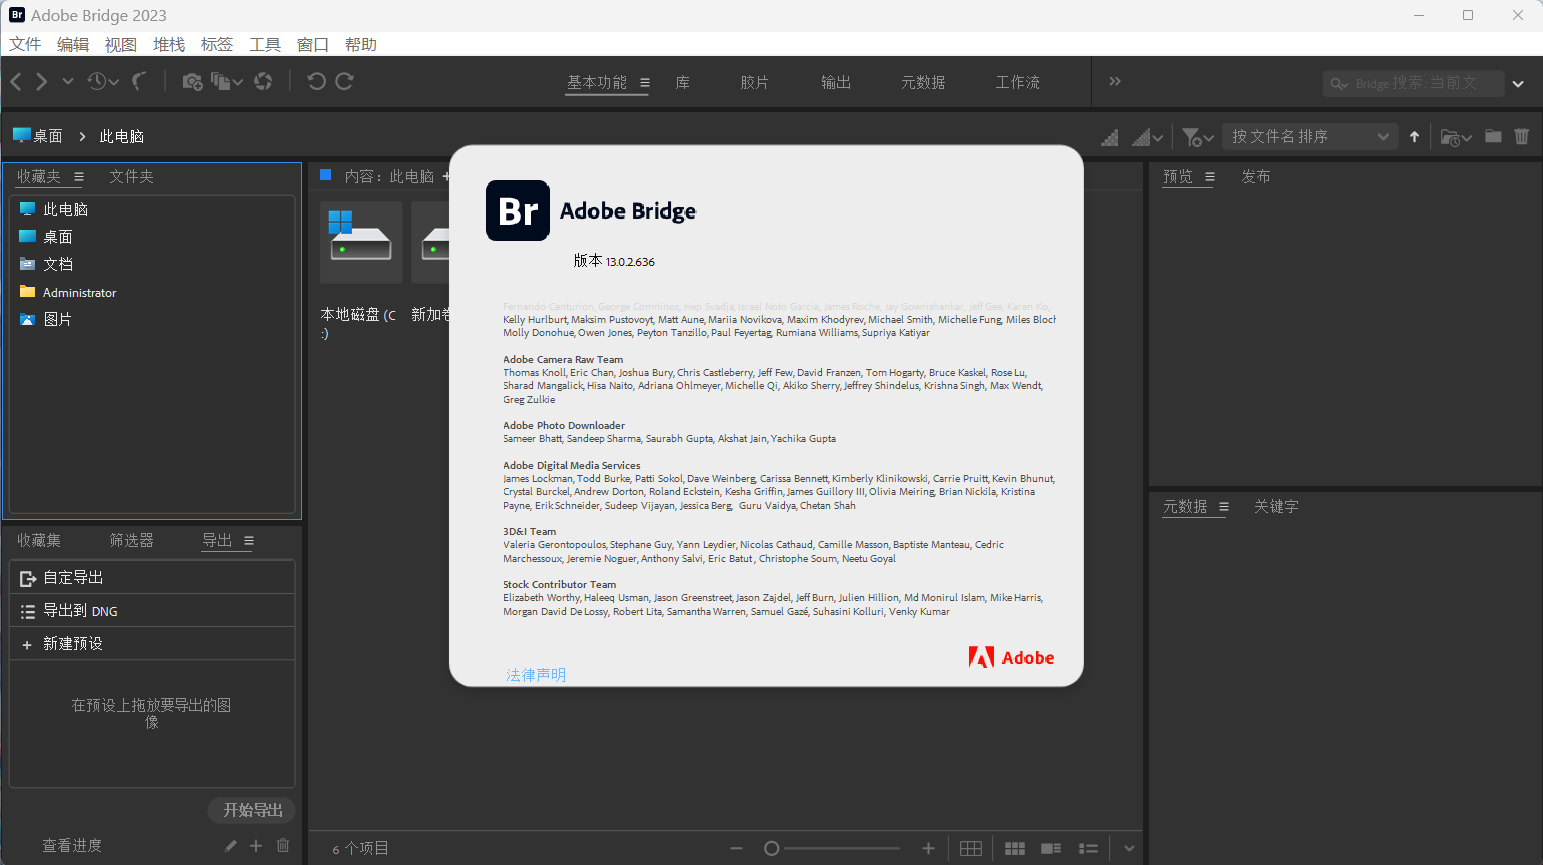 Adobe Bridge 2023 v13.0.4.755 for iphone download